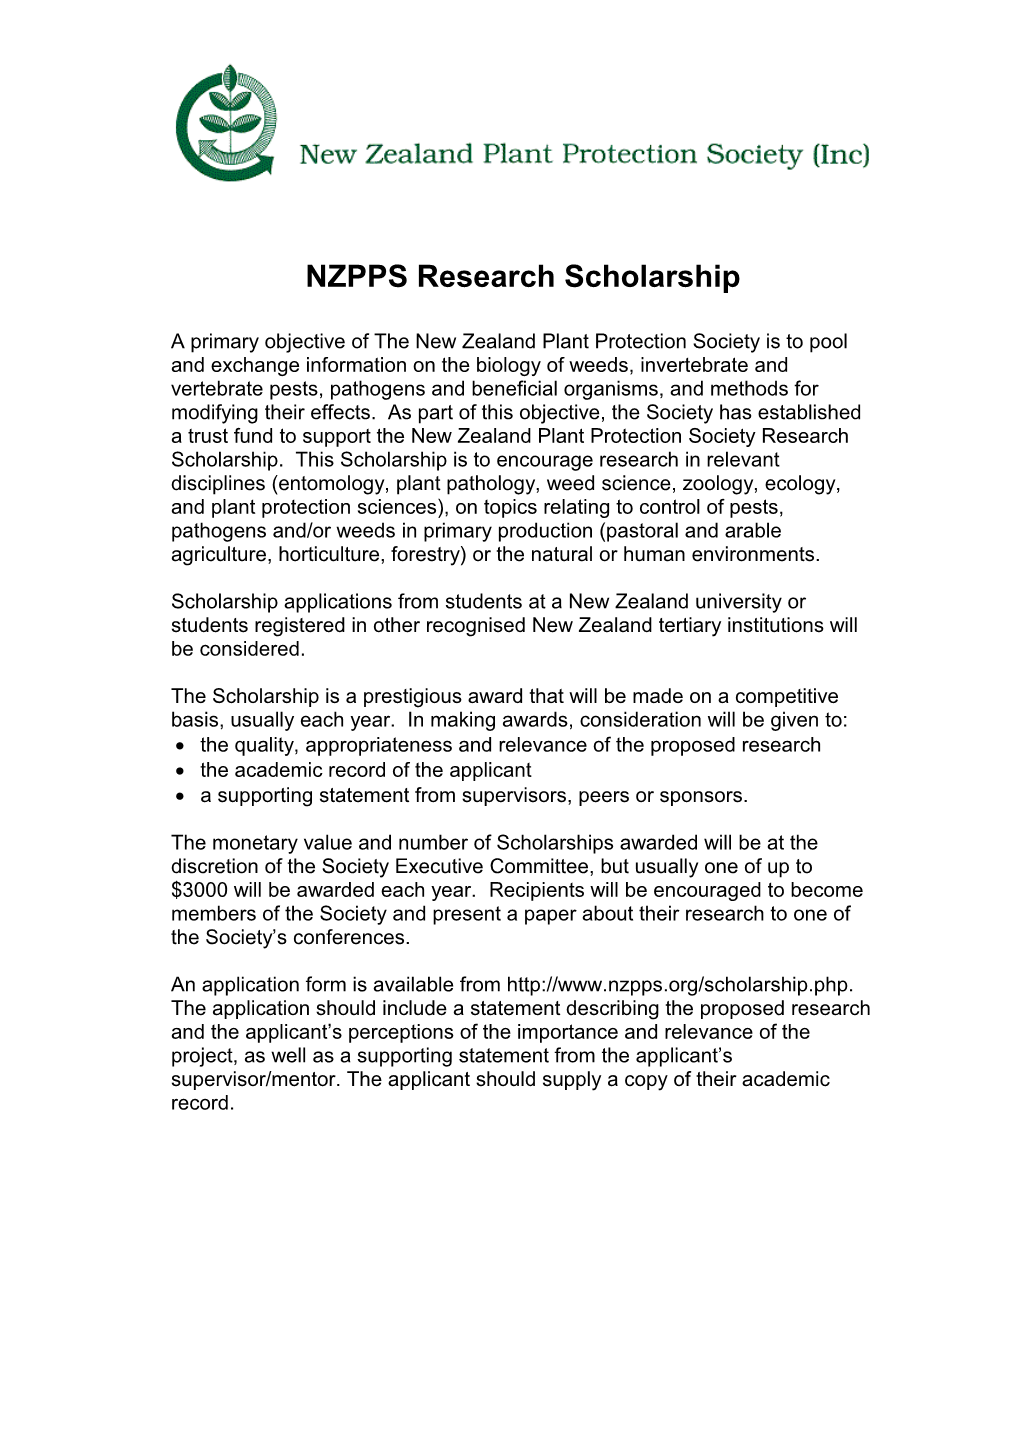 NZPPS Research Scholarship